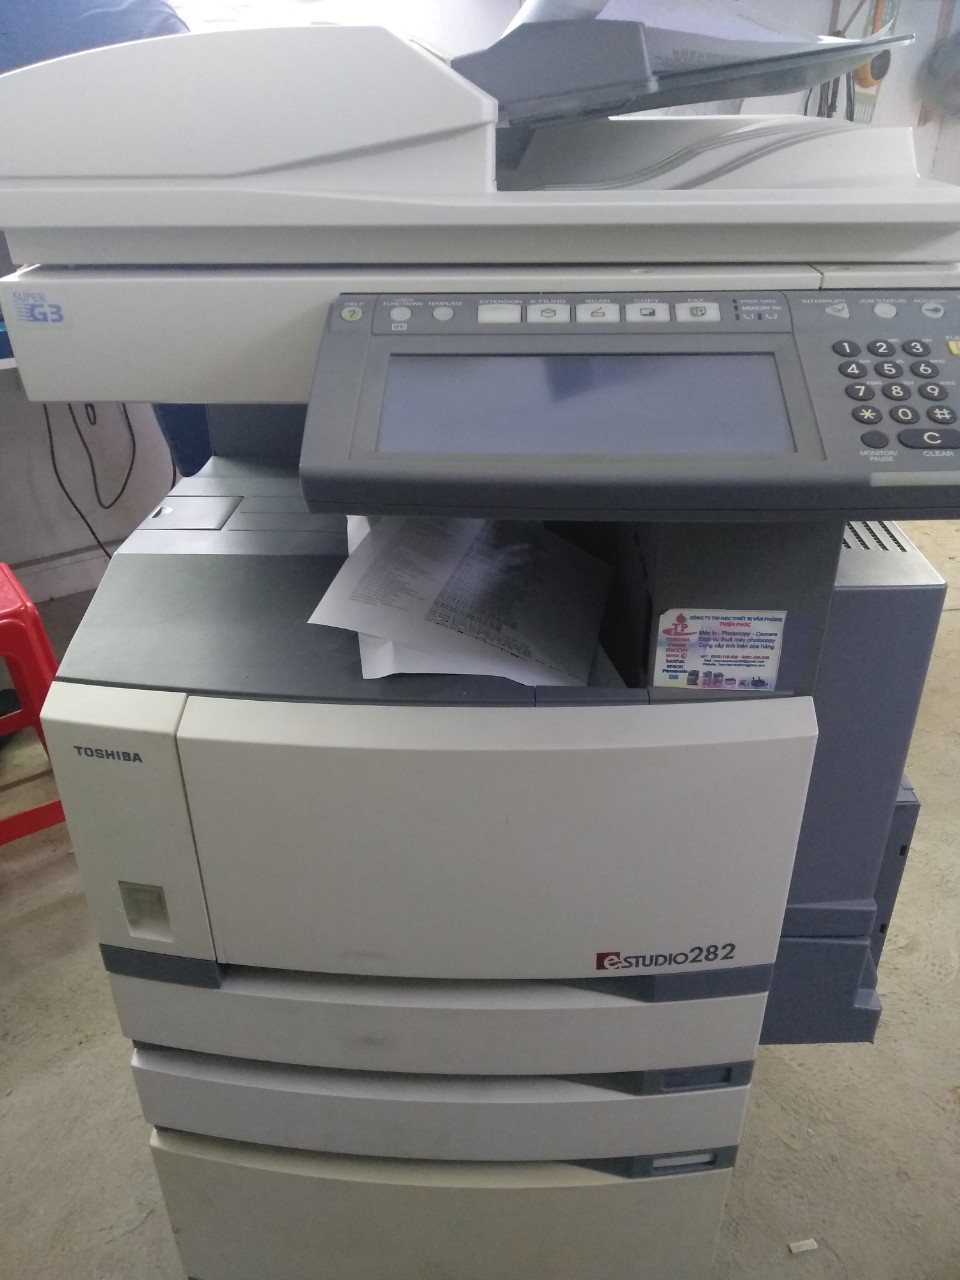 Bán máy photocopy cũ giá rẻ HCM  - Toshiba Studio E282